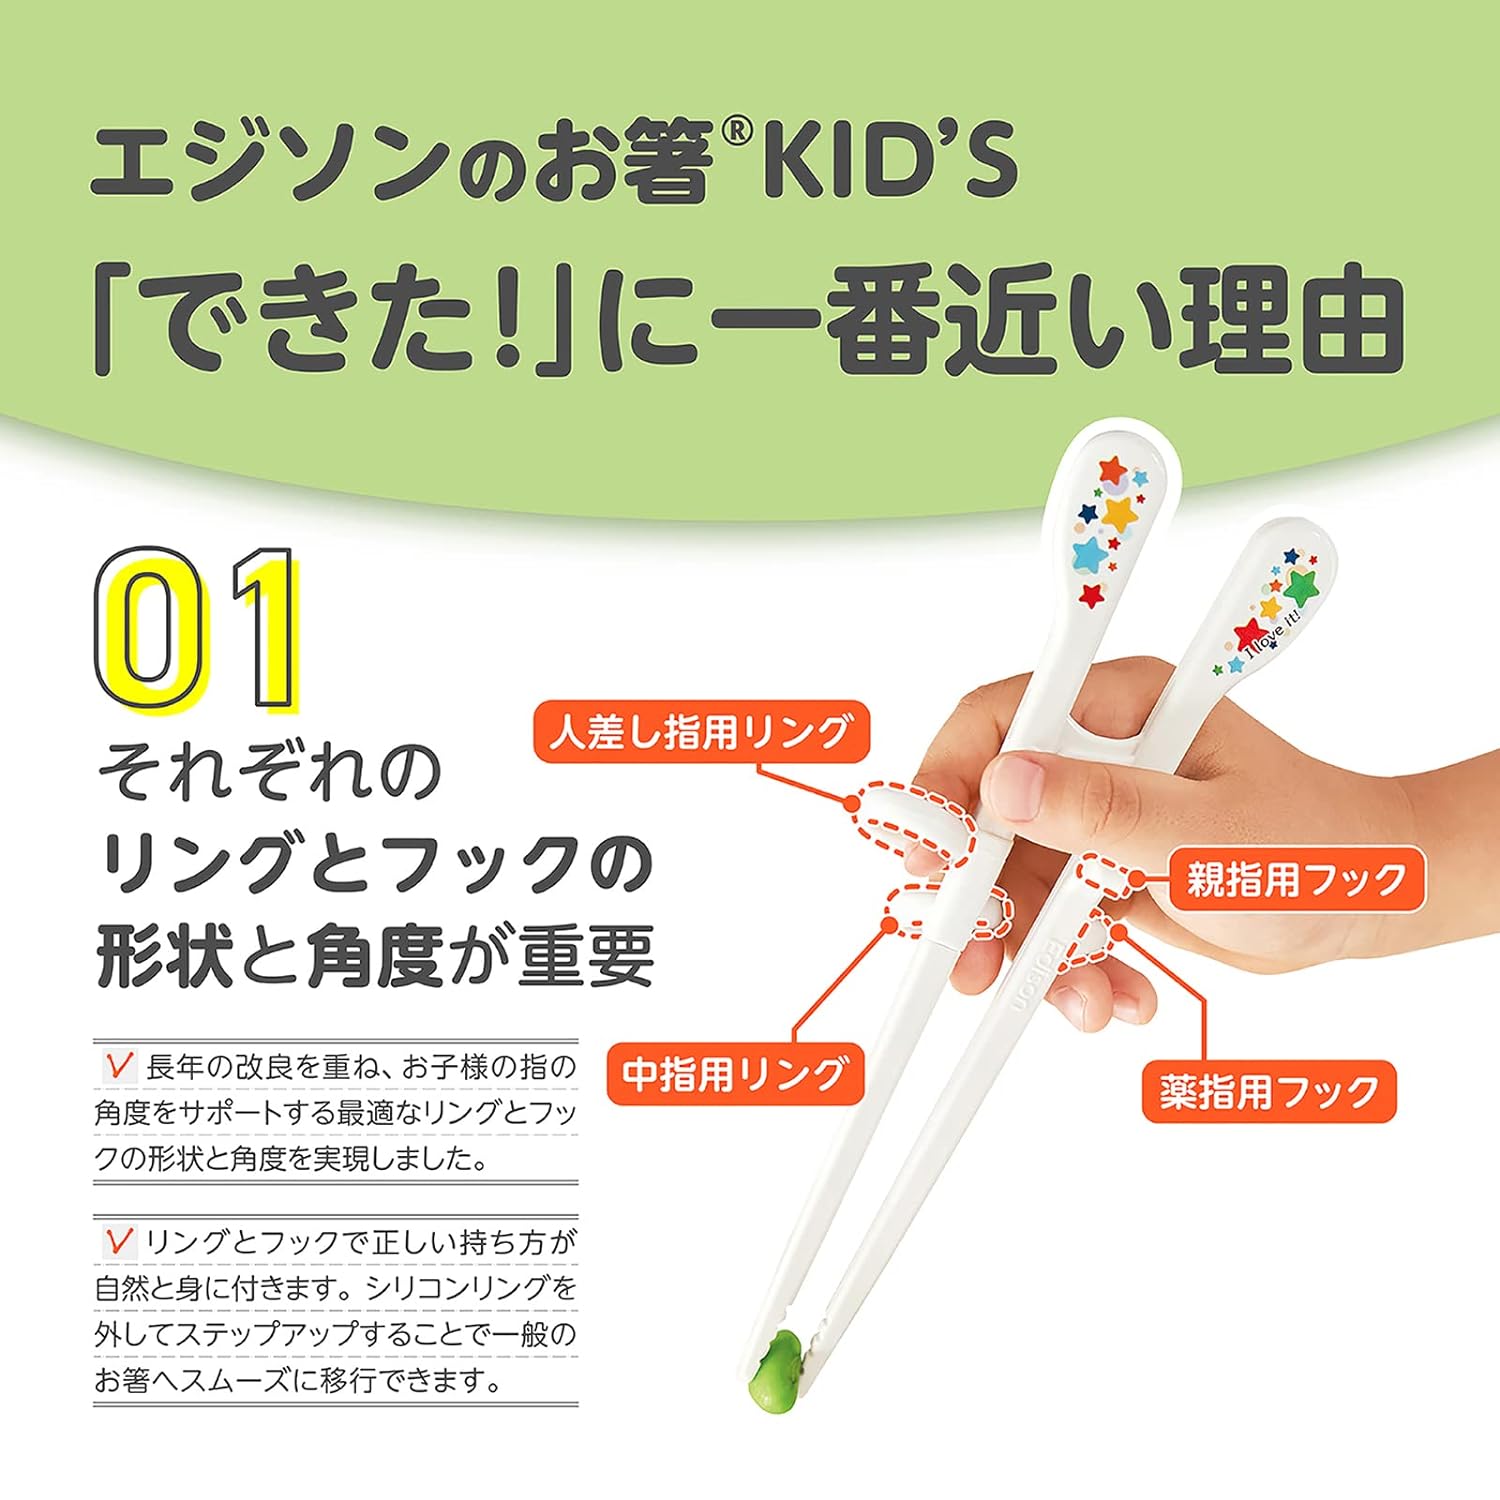 Edison mama Chopsticks Kid's Series Lower Grades 6.9 inches (17.5 cm) Left Hand White